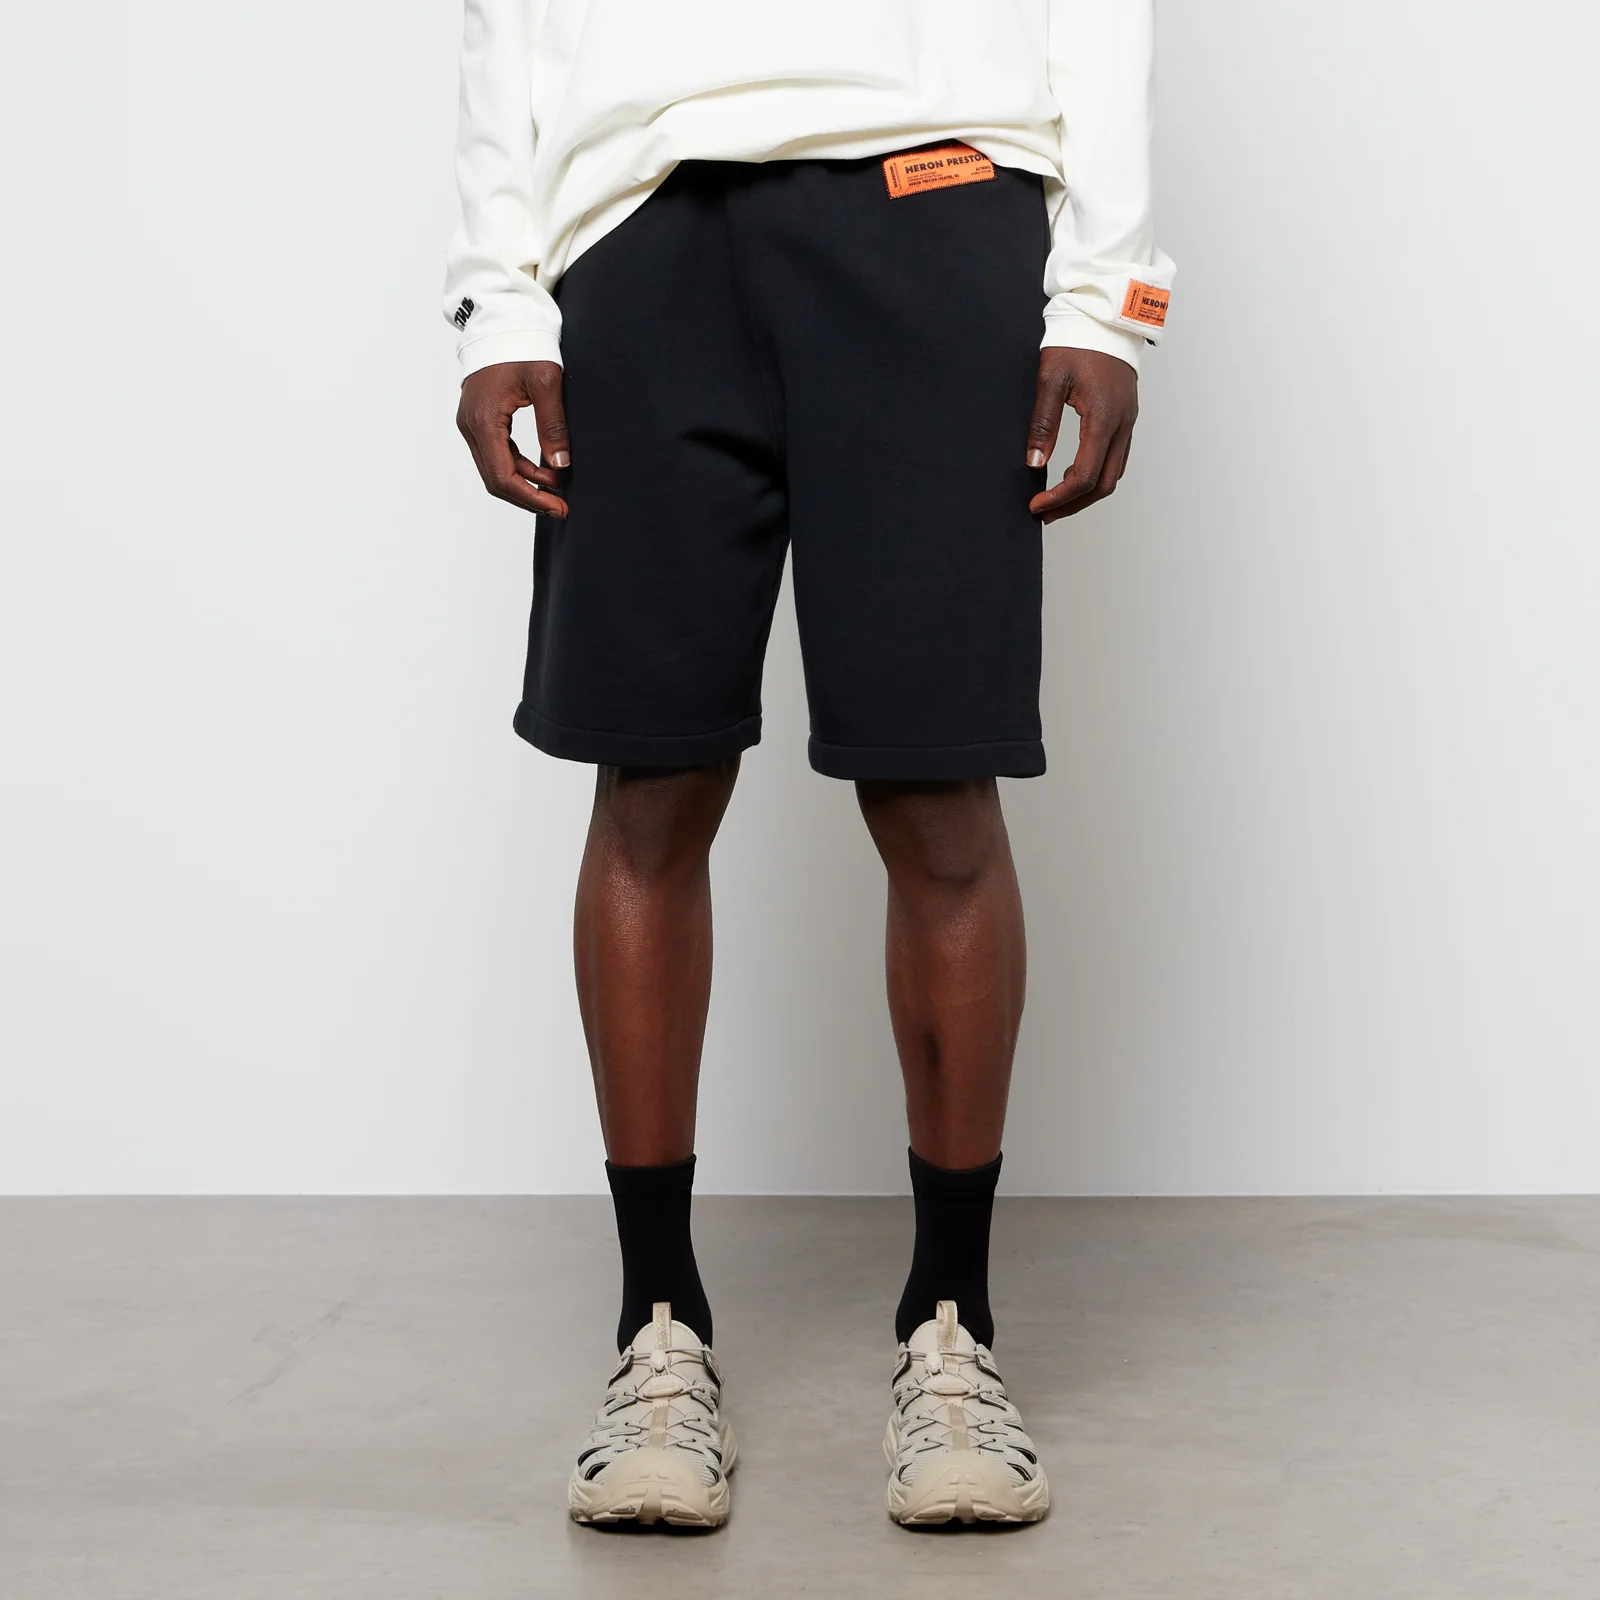 Heron Preston Men's Sweat Shorts - Black Image 1